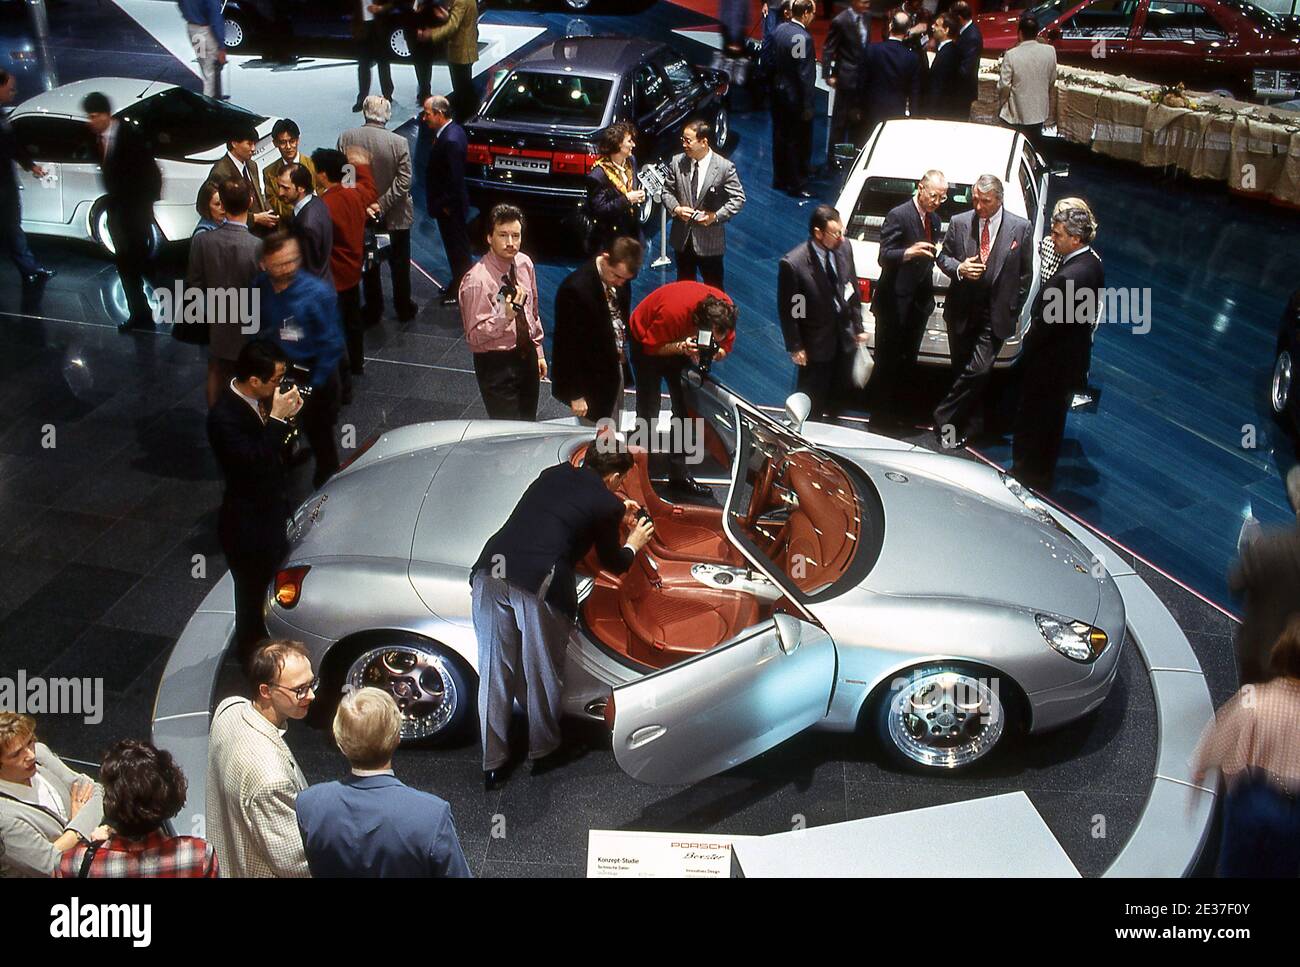 Porsche Boxster concepto de coche en el Salón del automóvil de Ginebra 1993 Foto de stock